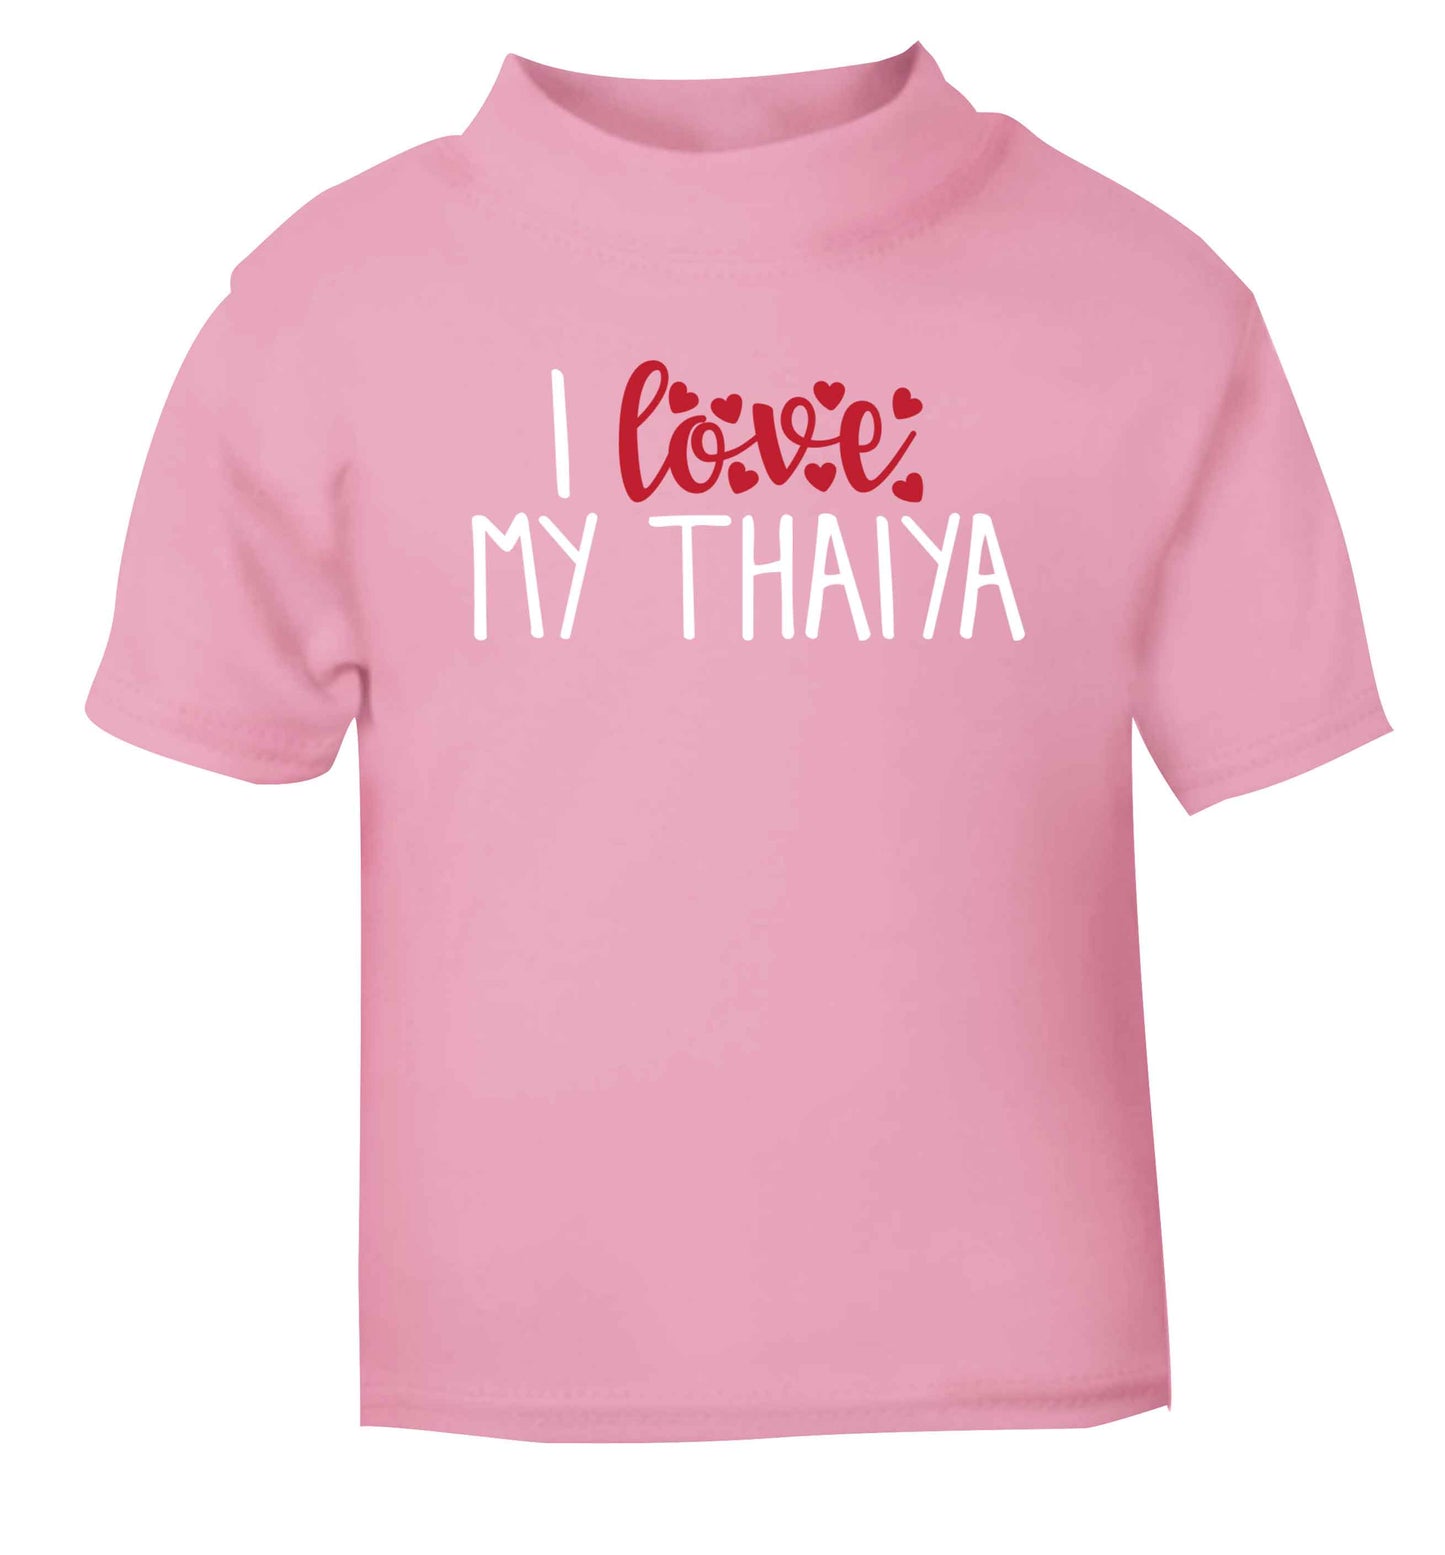 I love my thaiya light pink Baby Toddler Tshirt 2 Years